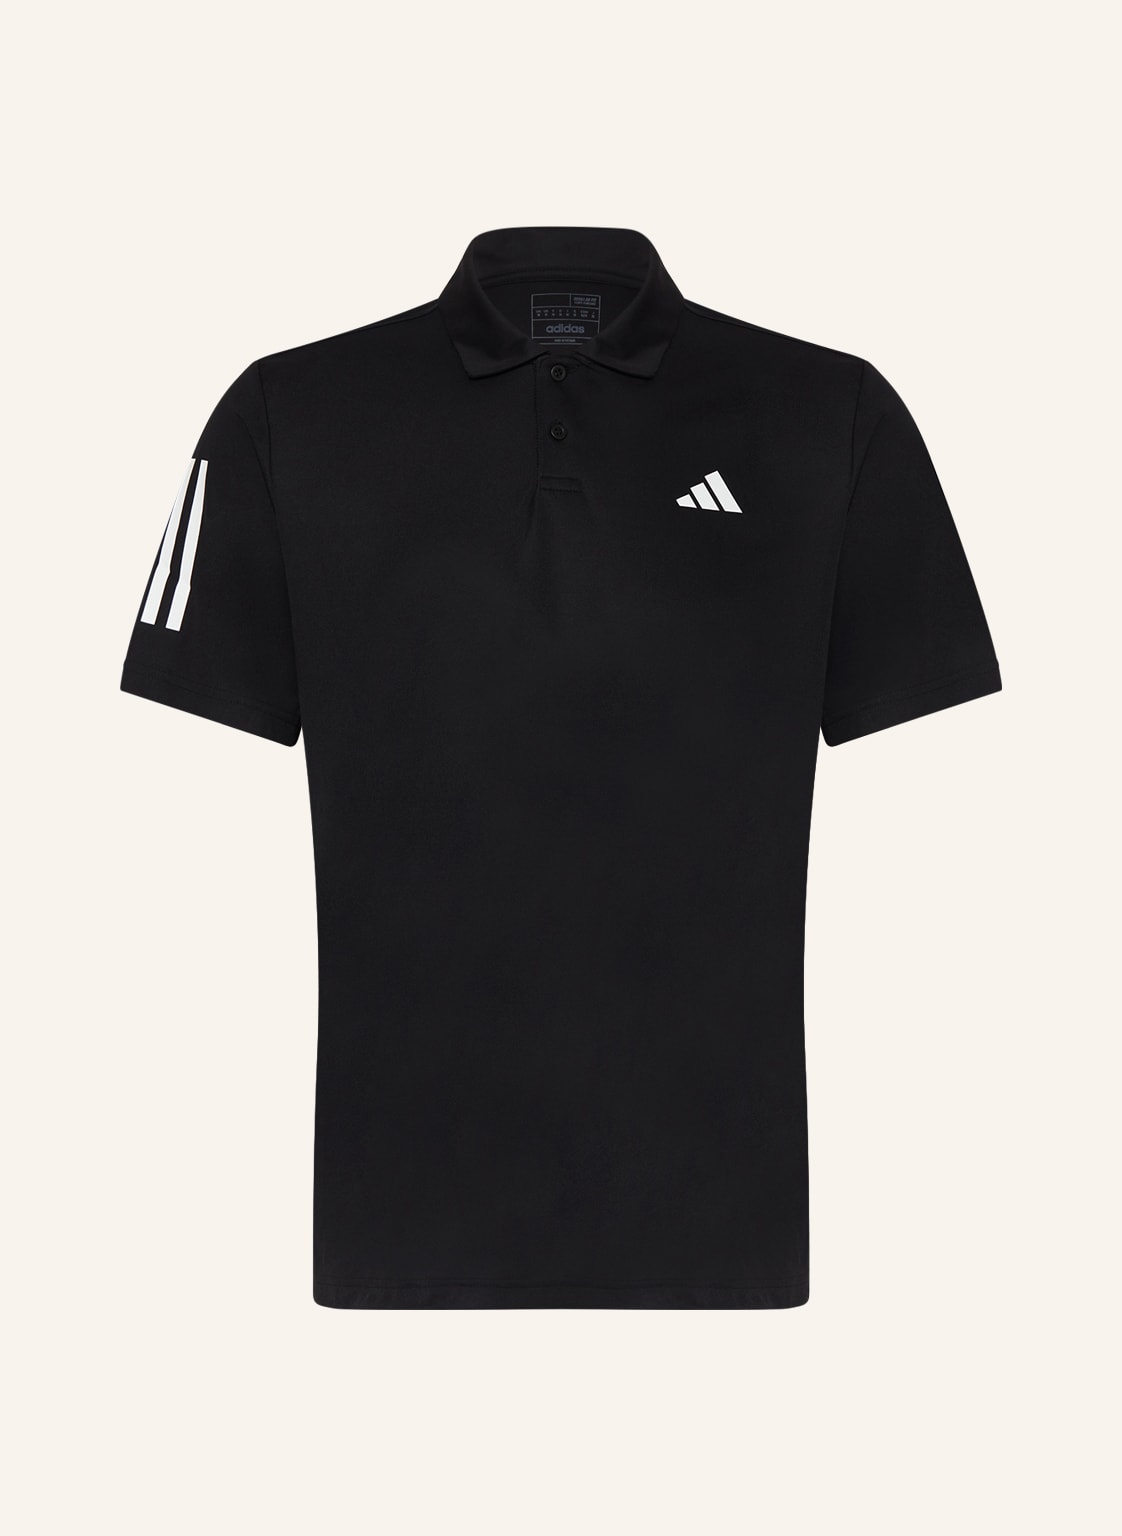 Image of Adidas Funktions-Poloshirt Club Mit Mesh schwarz